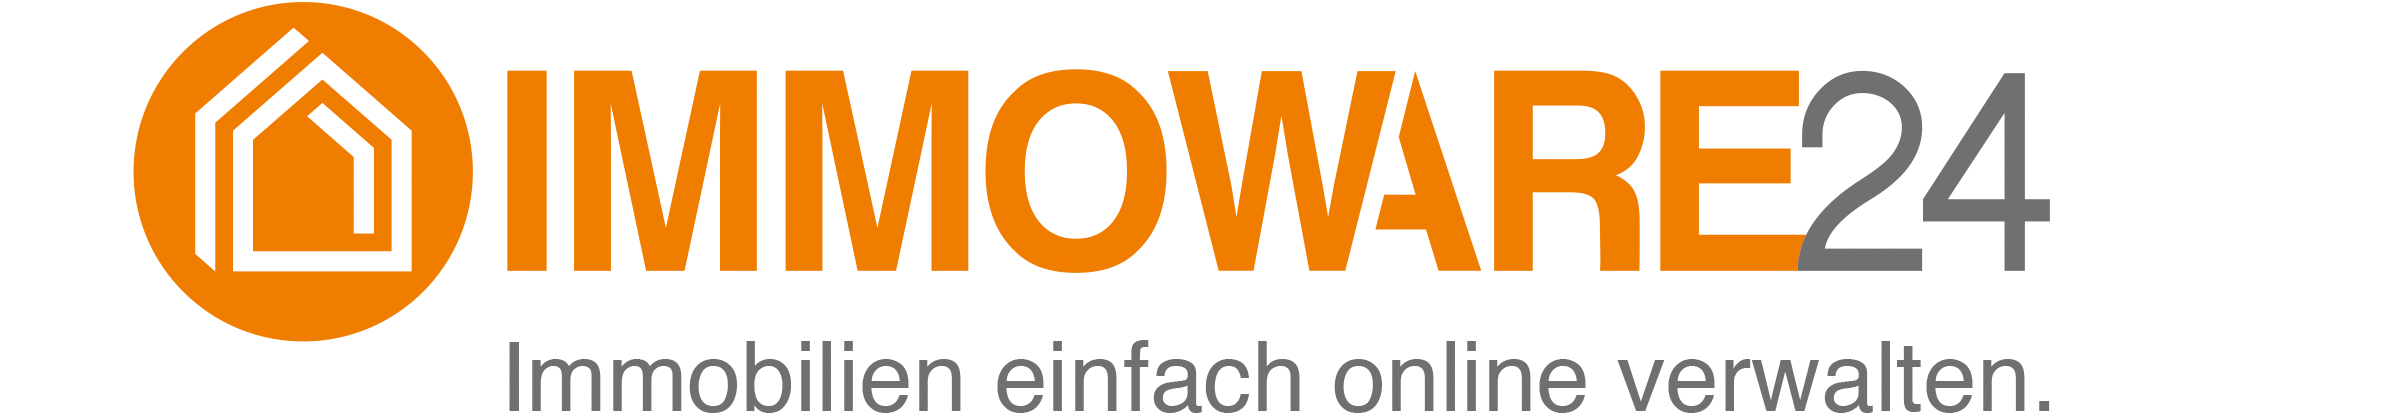 Logo Immoware24